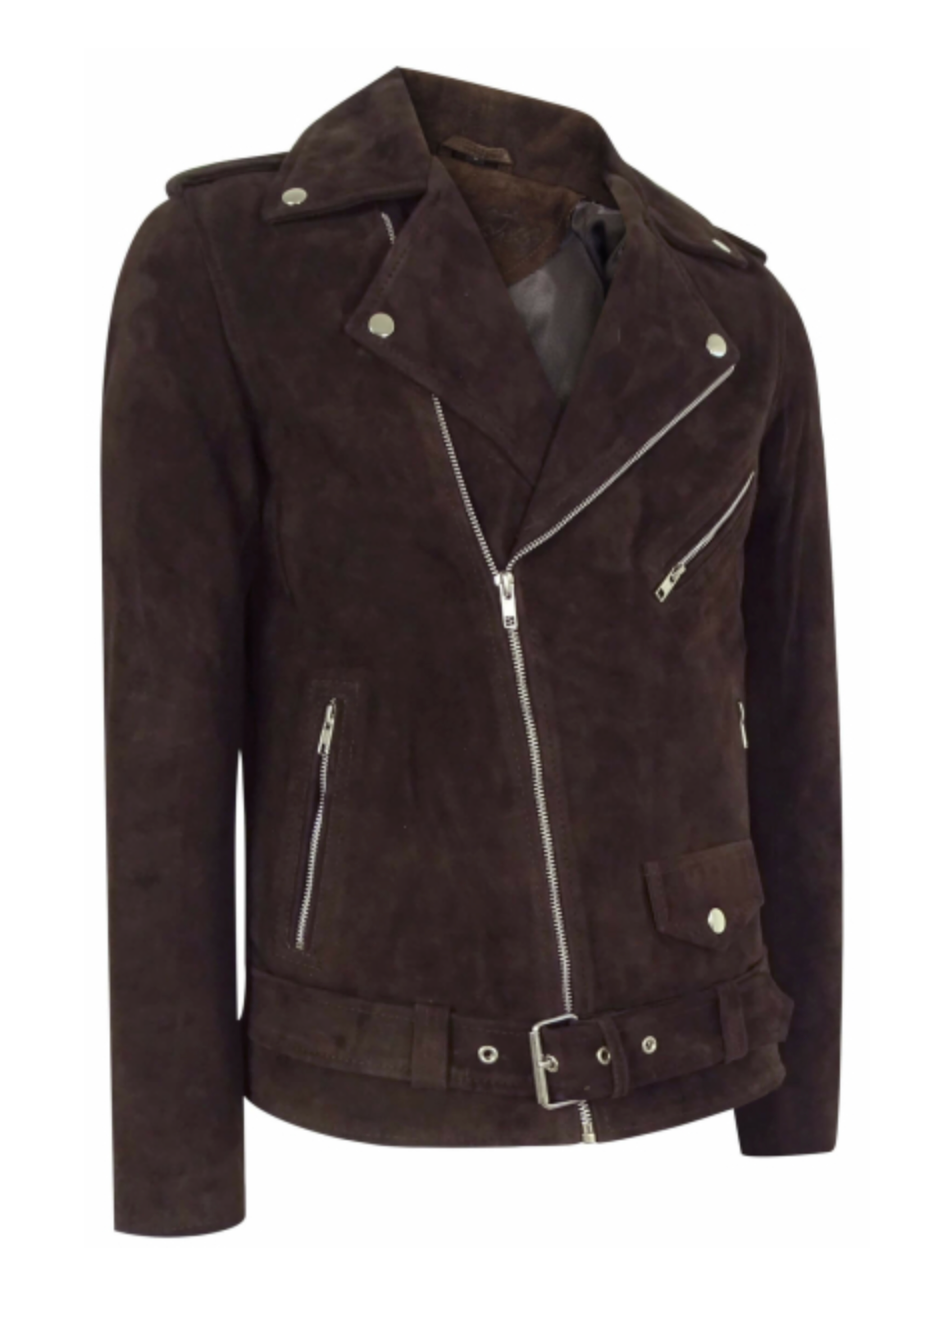 MEN's Suede Brown Leather Jacket